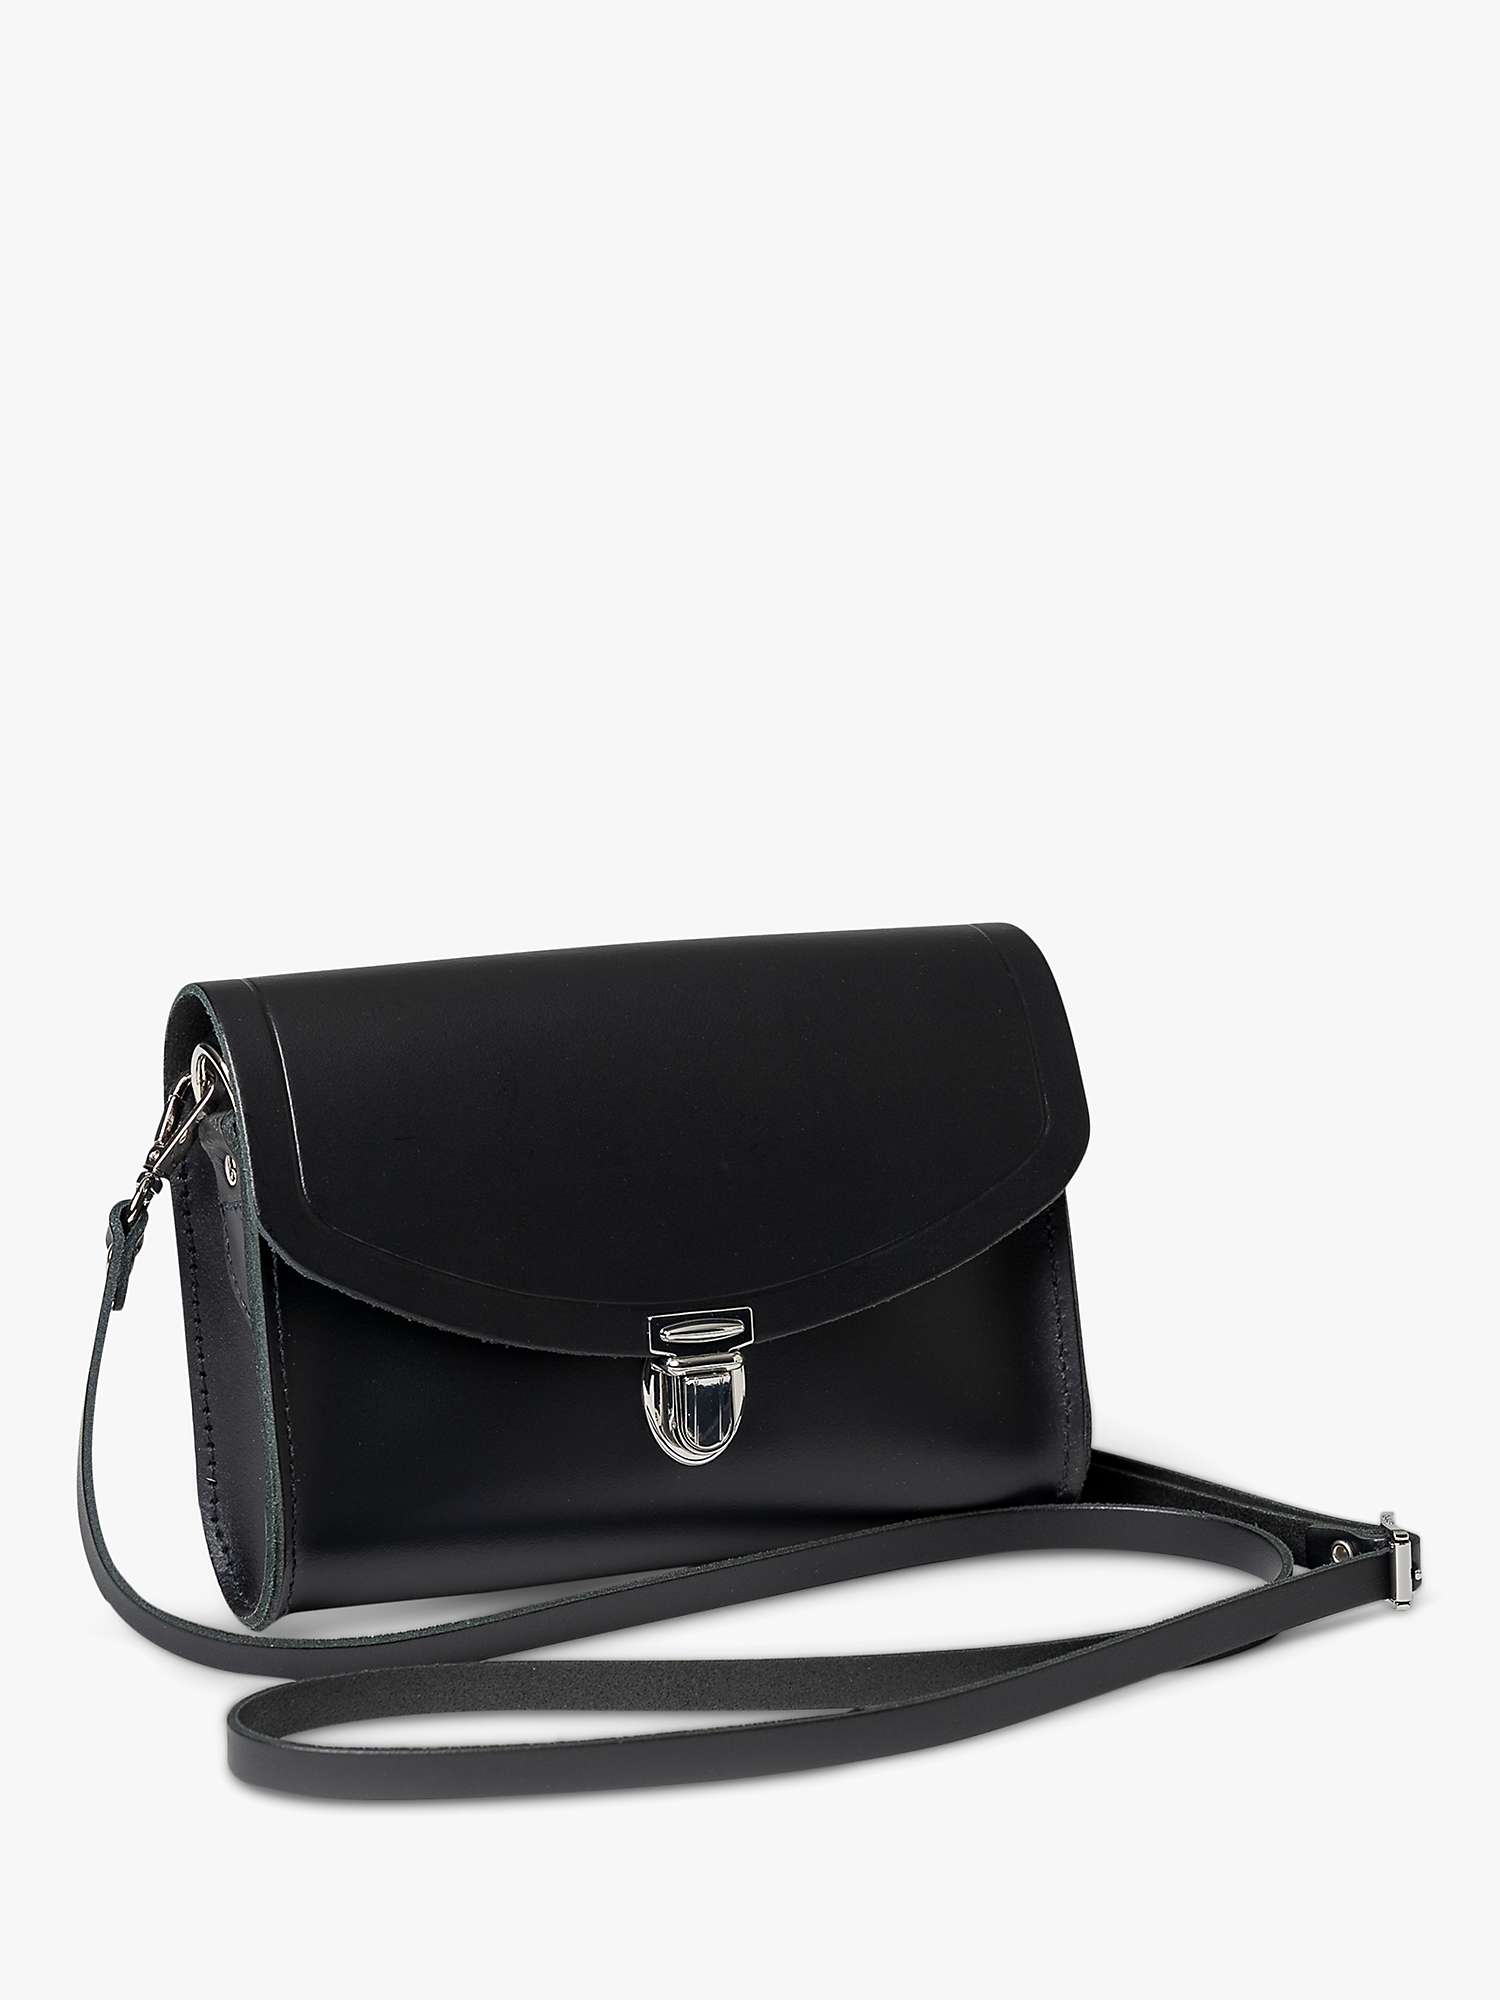 Buy Cambridge Satchel The Medium Pushlock Leather Shoulder Bag, Black Online at johnlewis.com